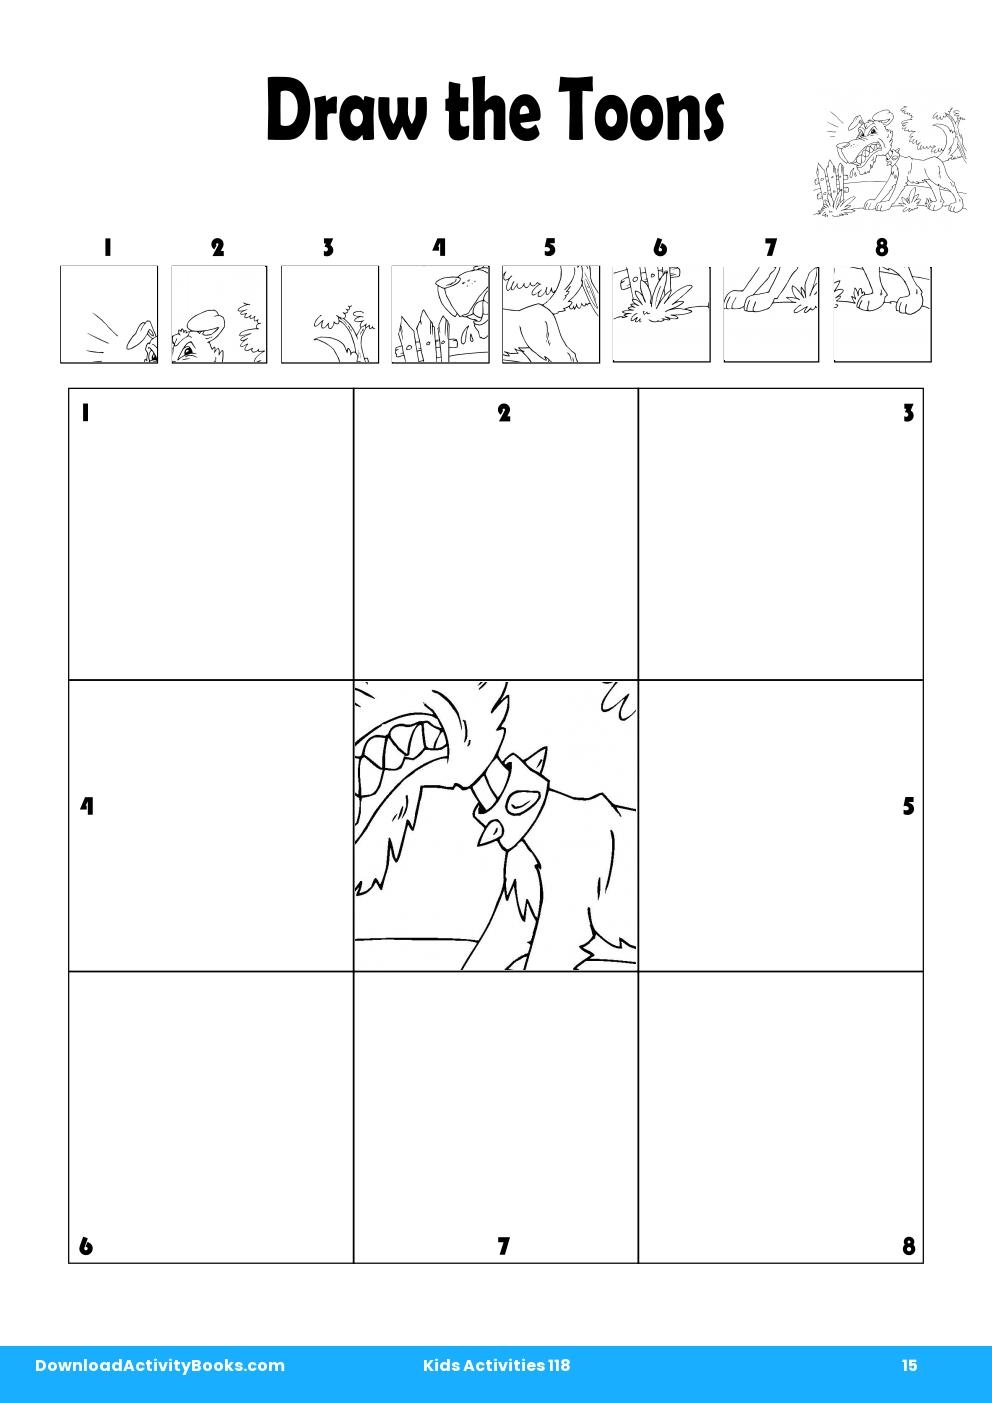 Draw The Toons in Kids Activities 118